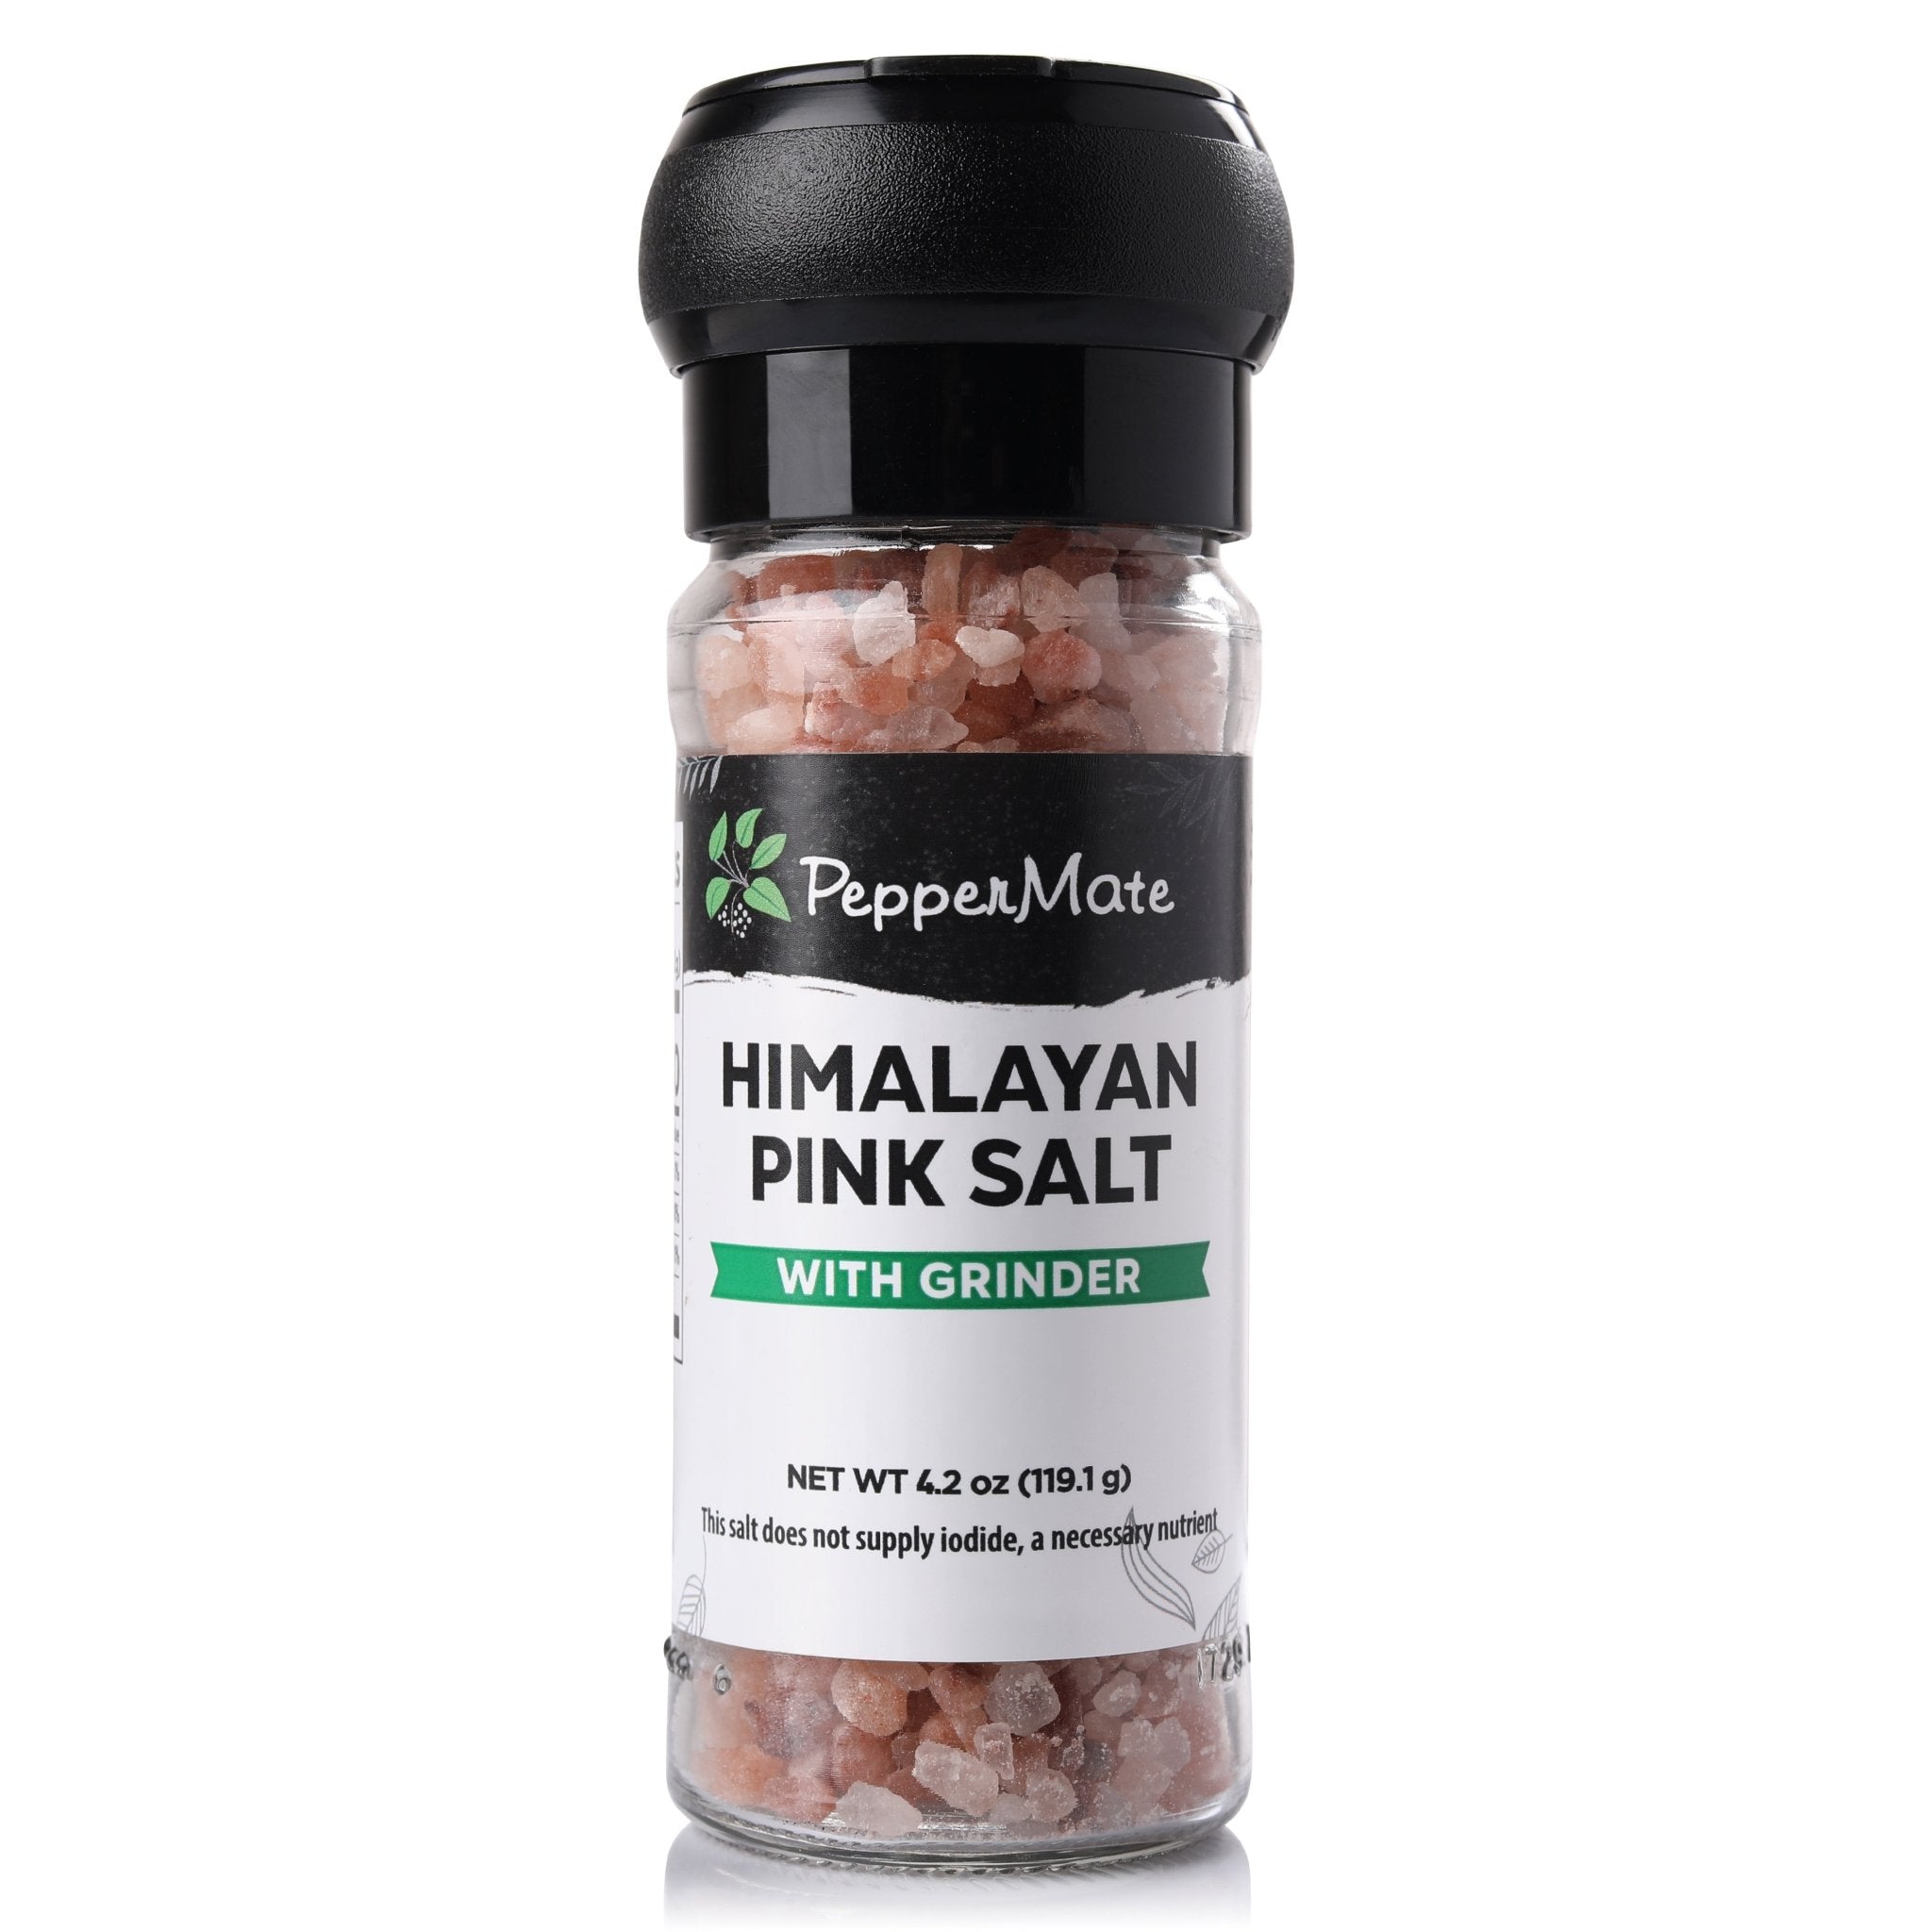 Wellsley Farms Himalayan Pink Salt Grinder, 13.5 oz.